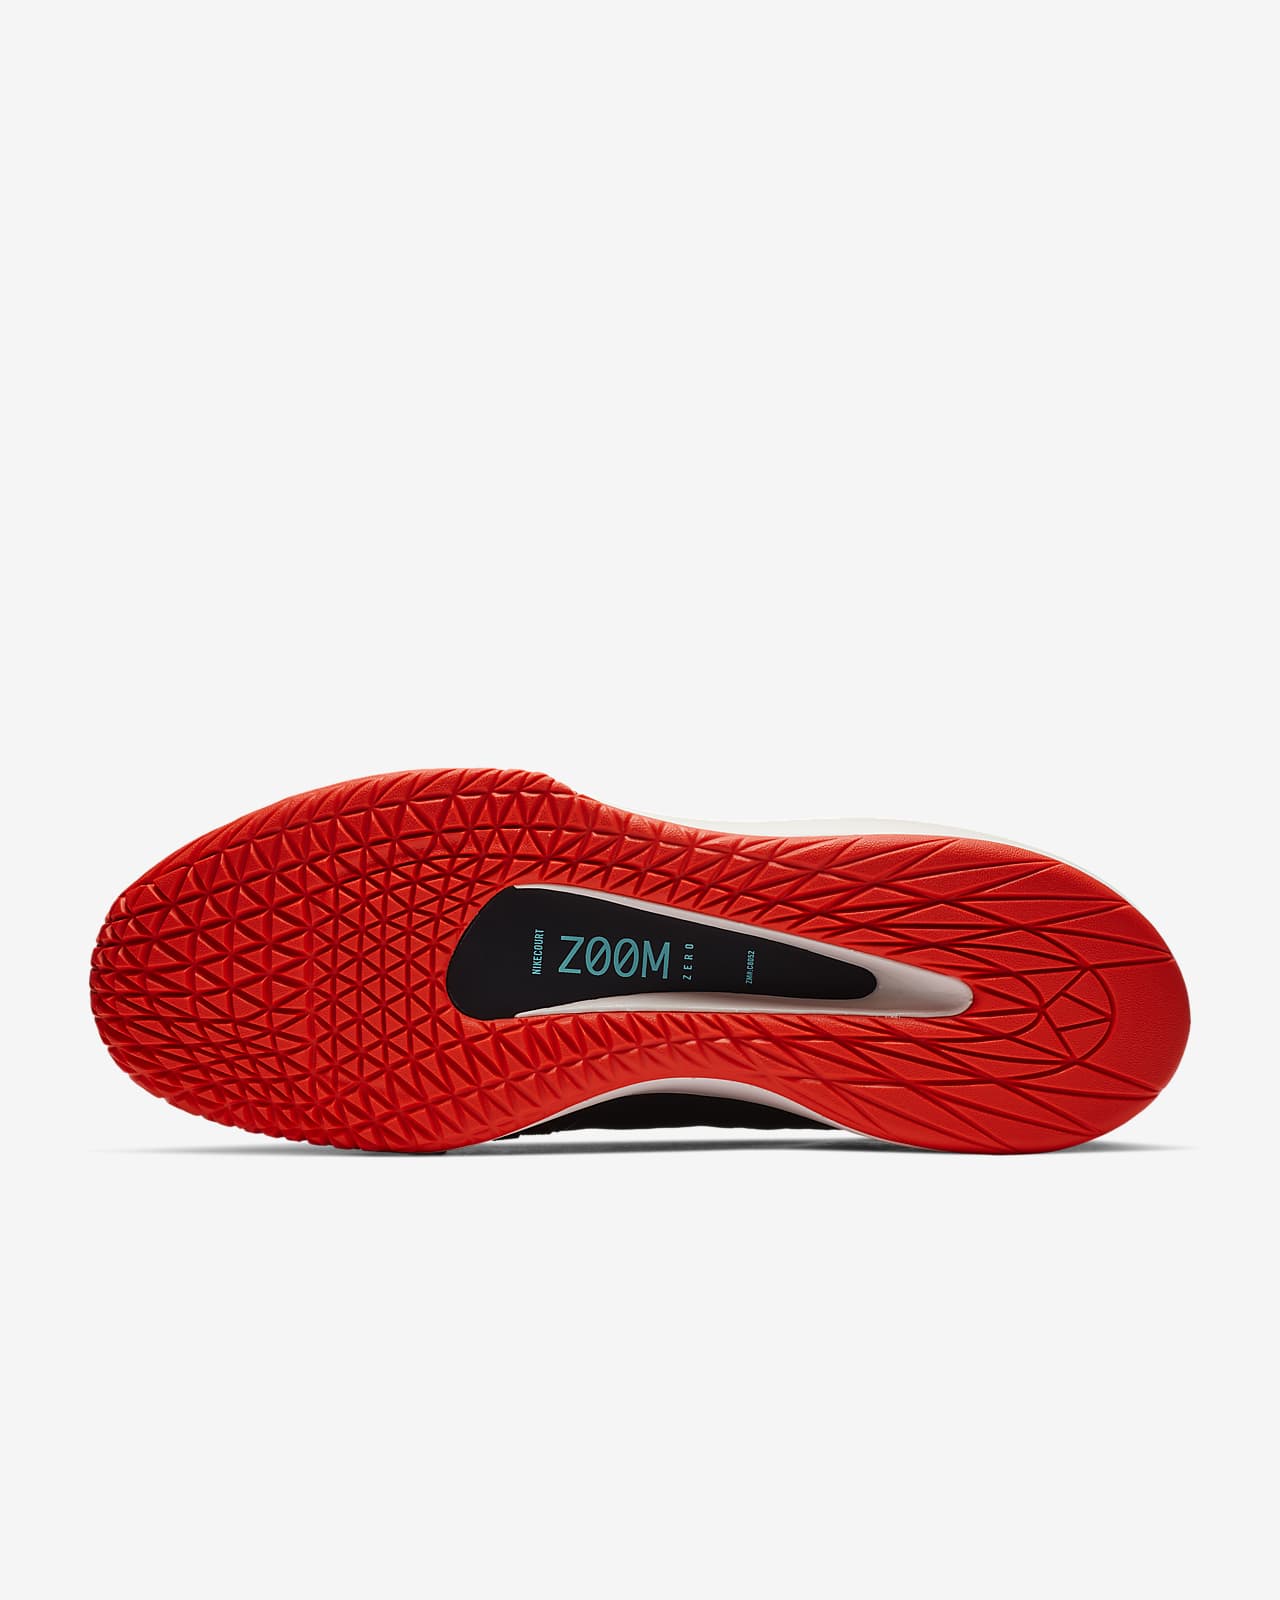 nike air zoom zero premium men's tennis shoe